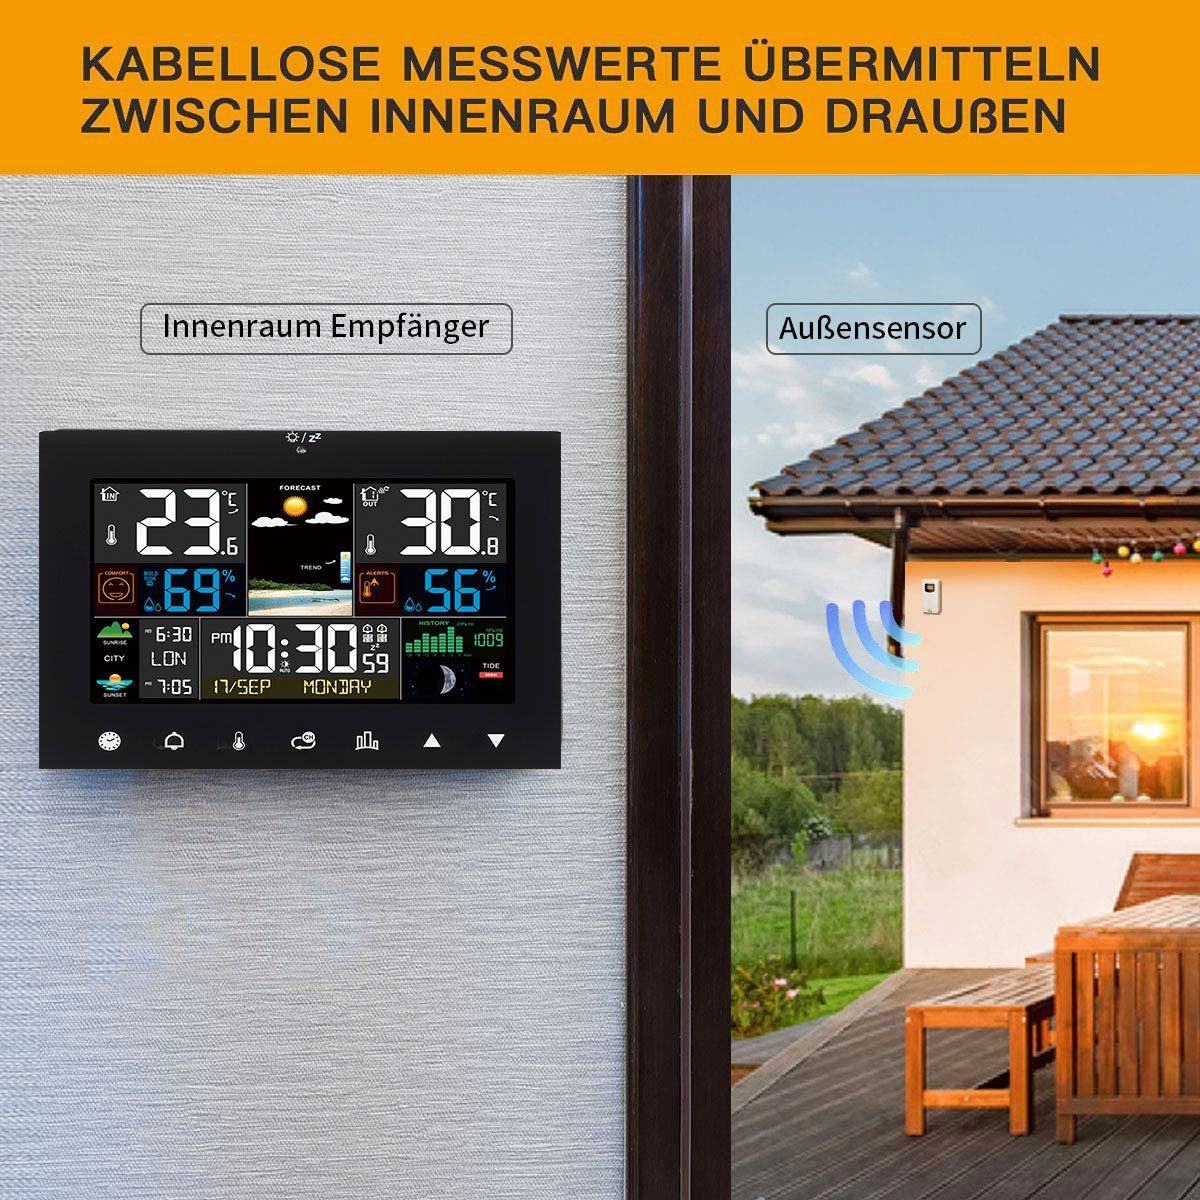 (Kalender Kalender Hygrometer Wetterstation Thermometer Farbdisplay) LED mit oyajia mit Wetterstation Funk-Außensensor,